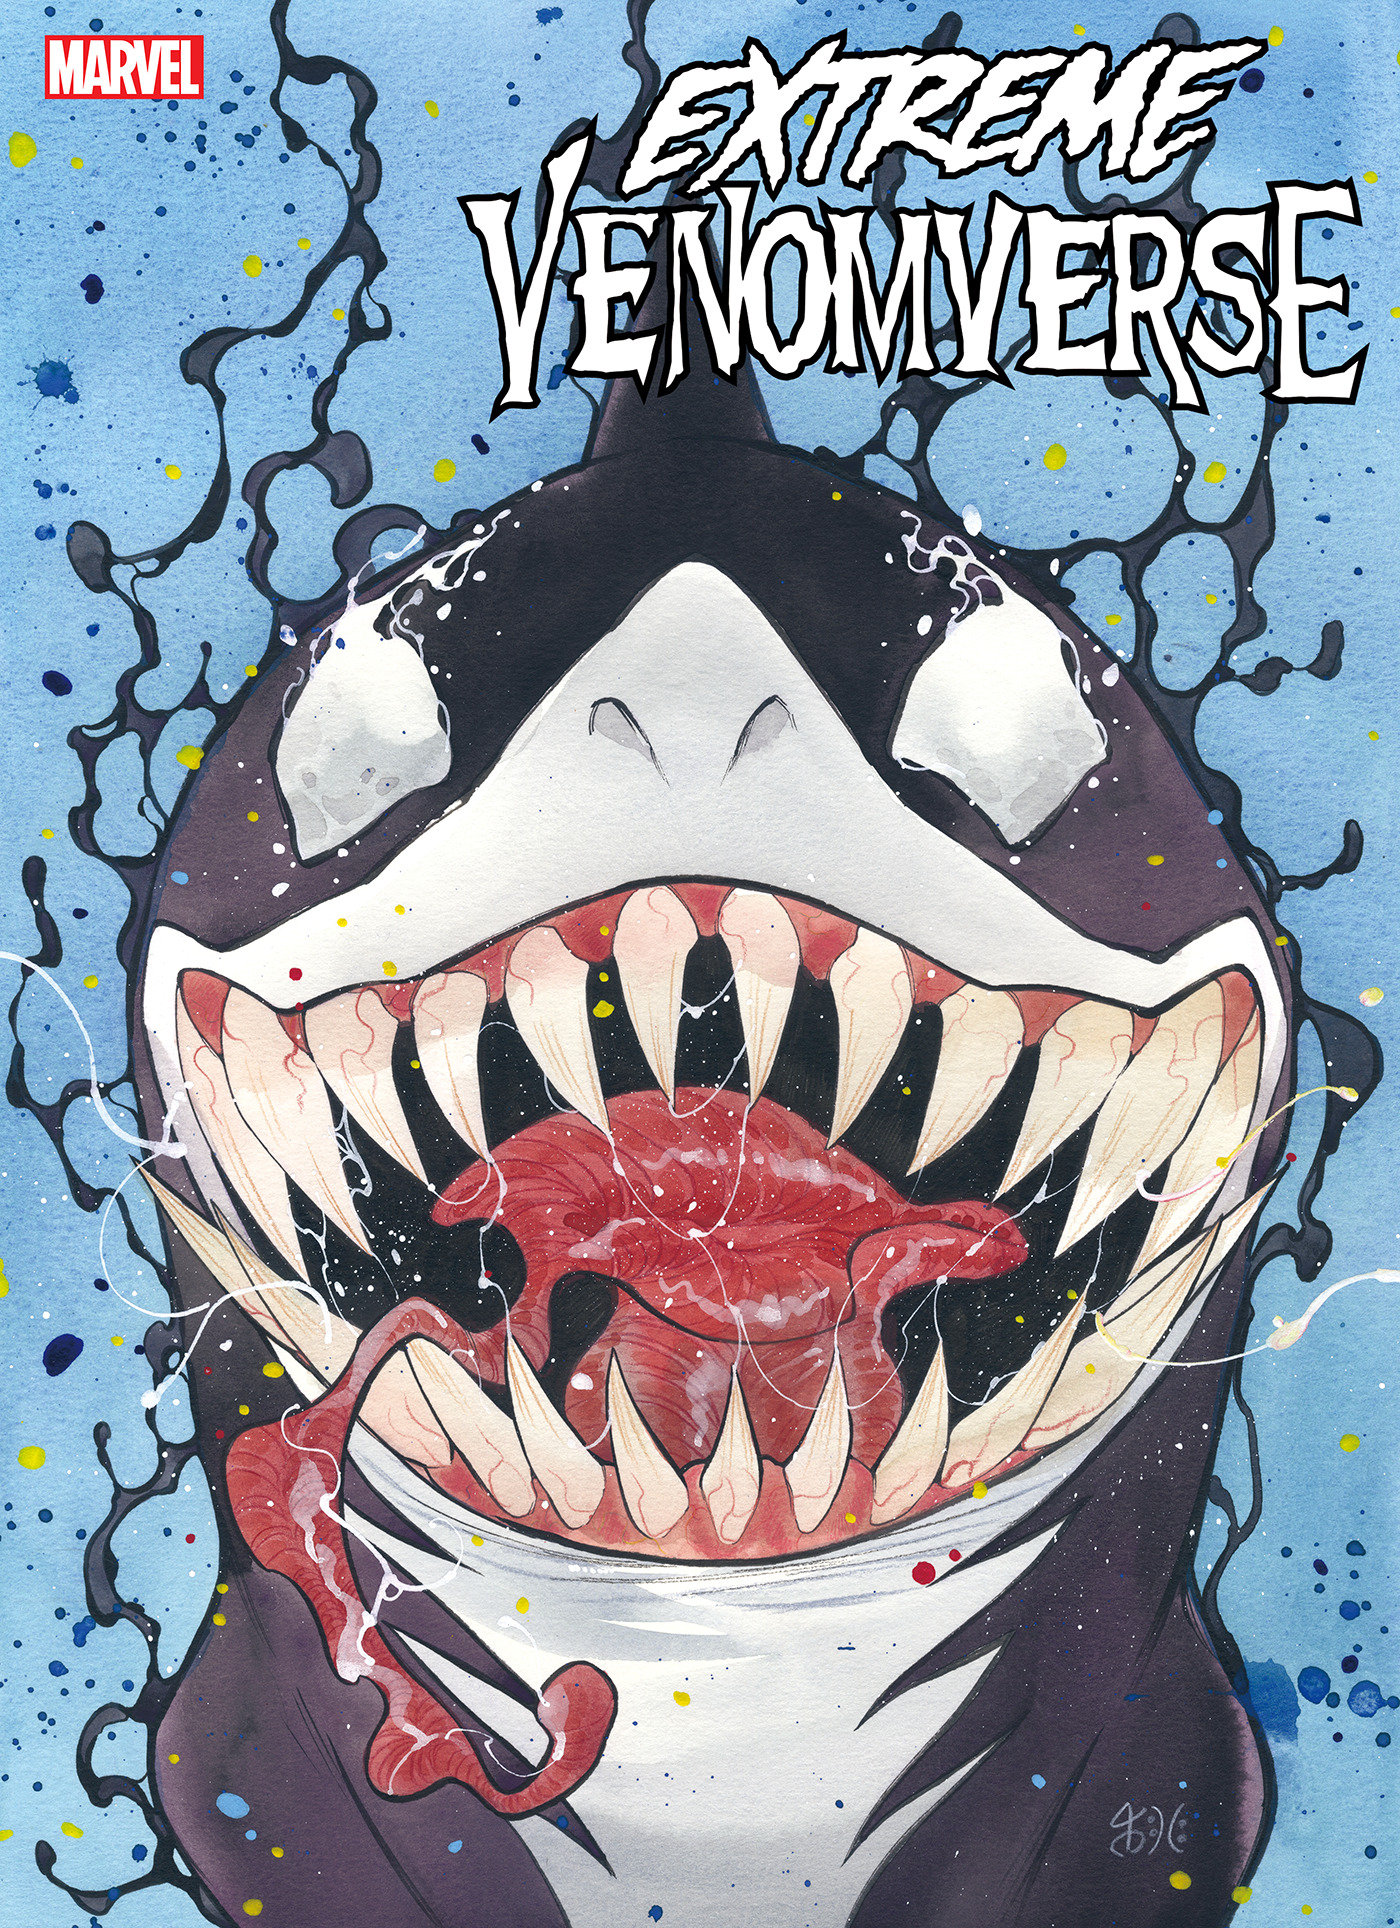 Extreme Venomverse #5 Peach Momoko Variant